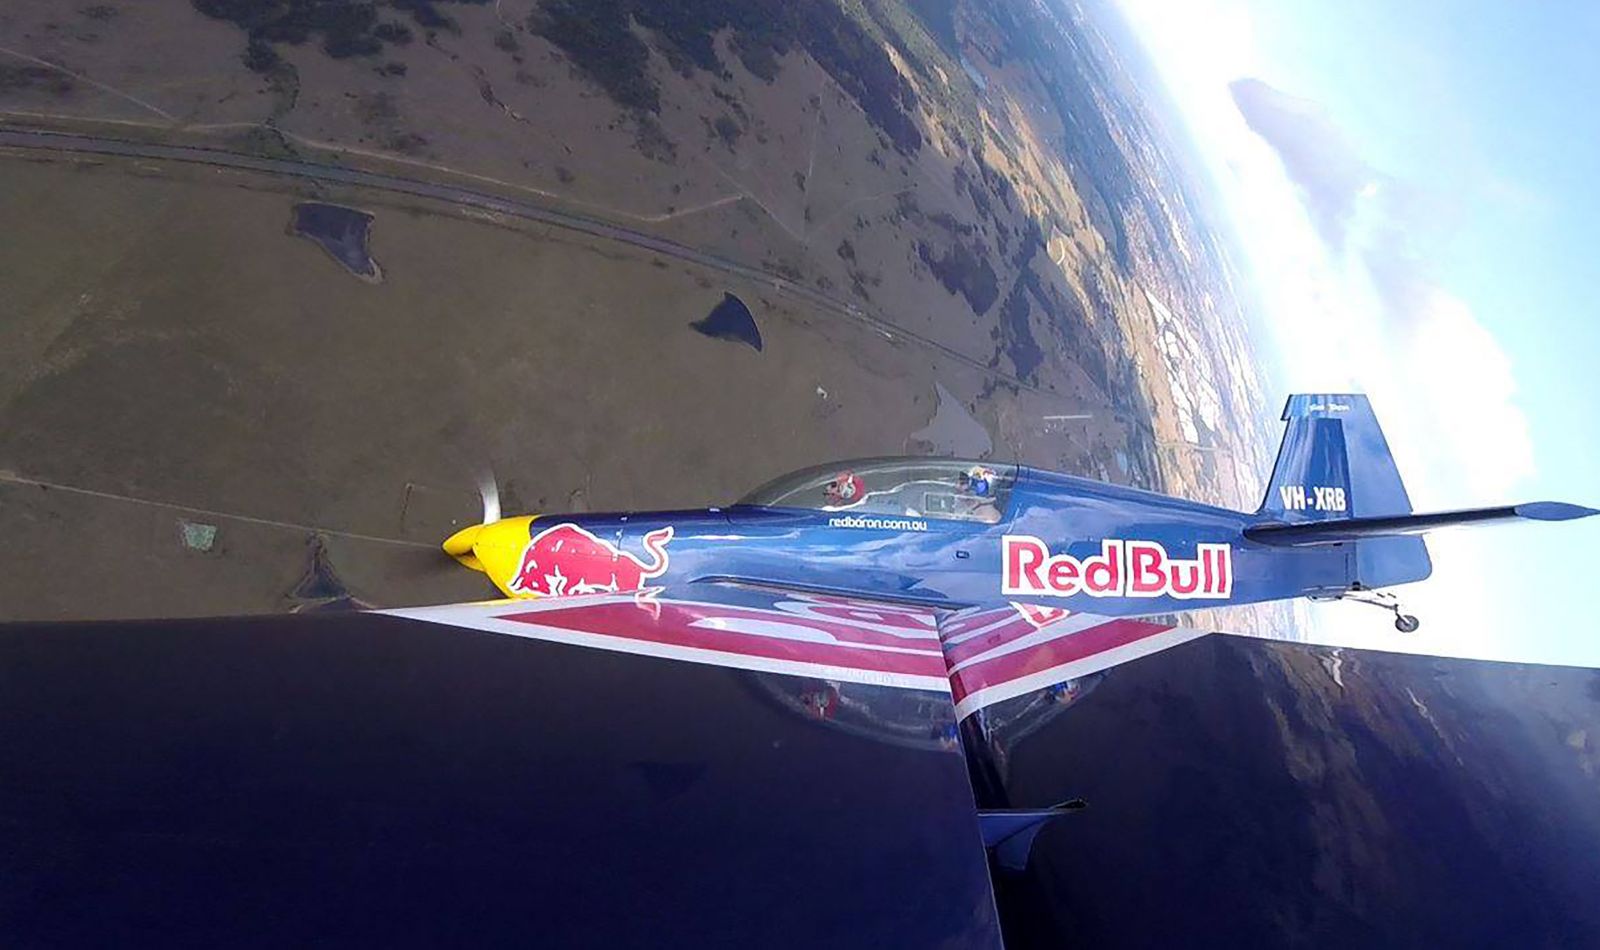 Conrad Reyners flying in a Red Bull stunt plane.